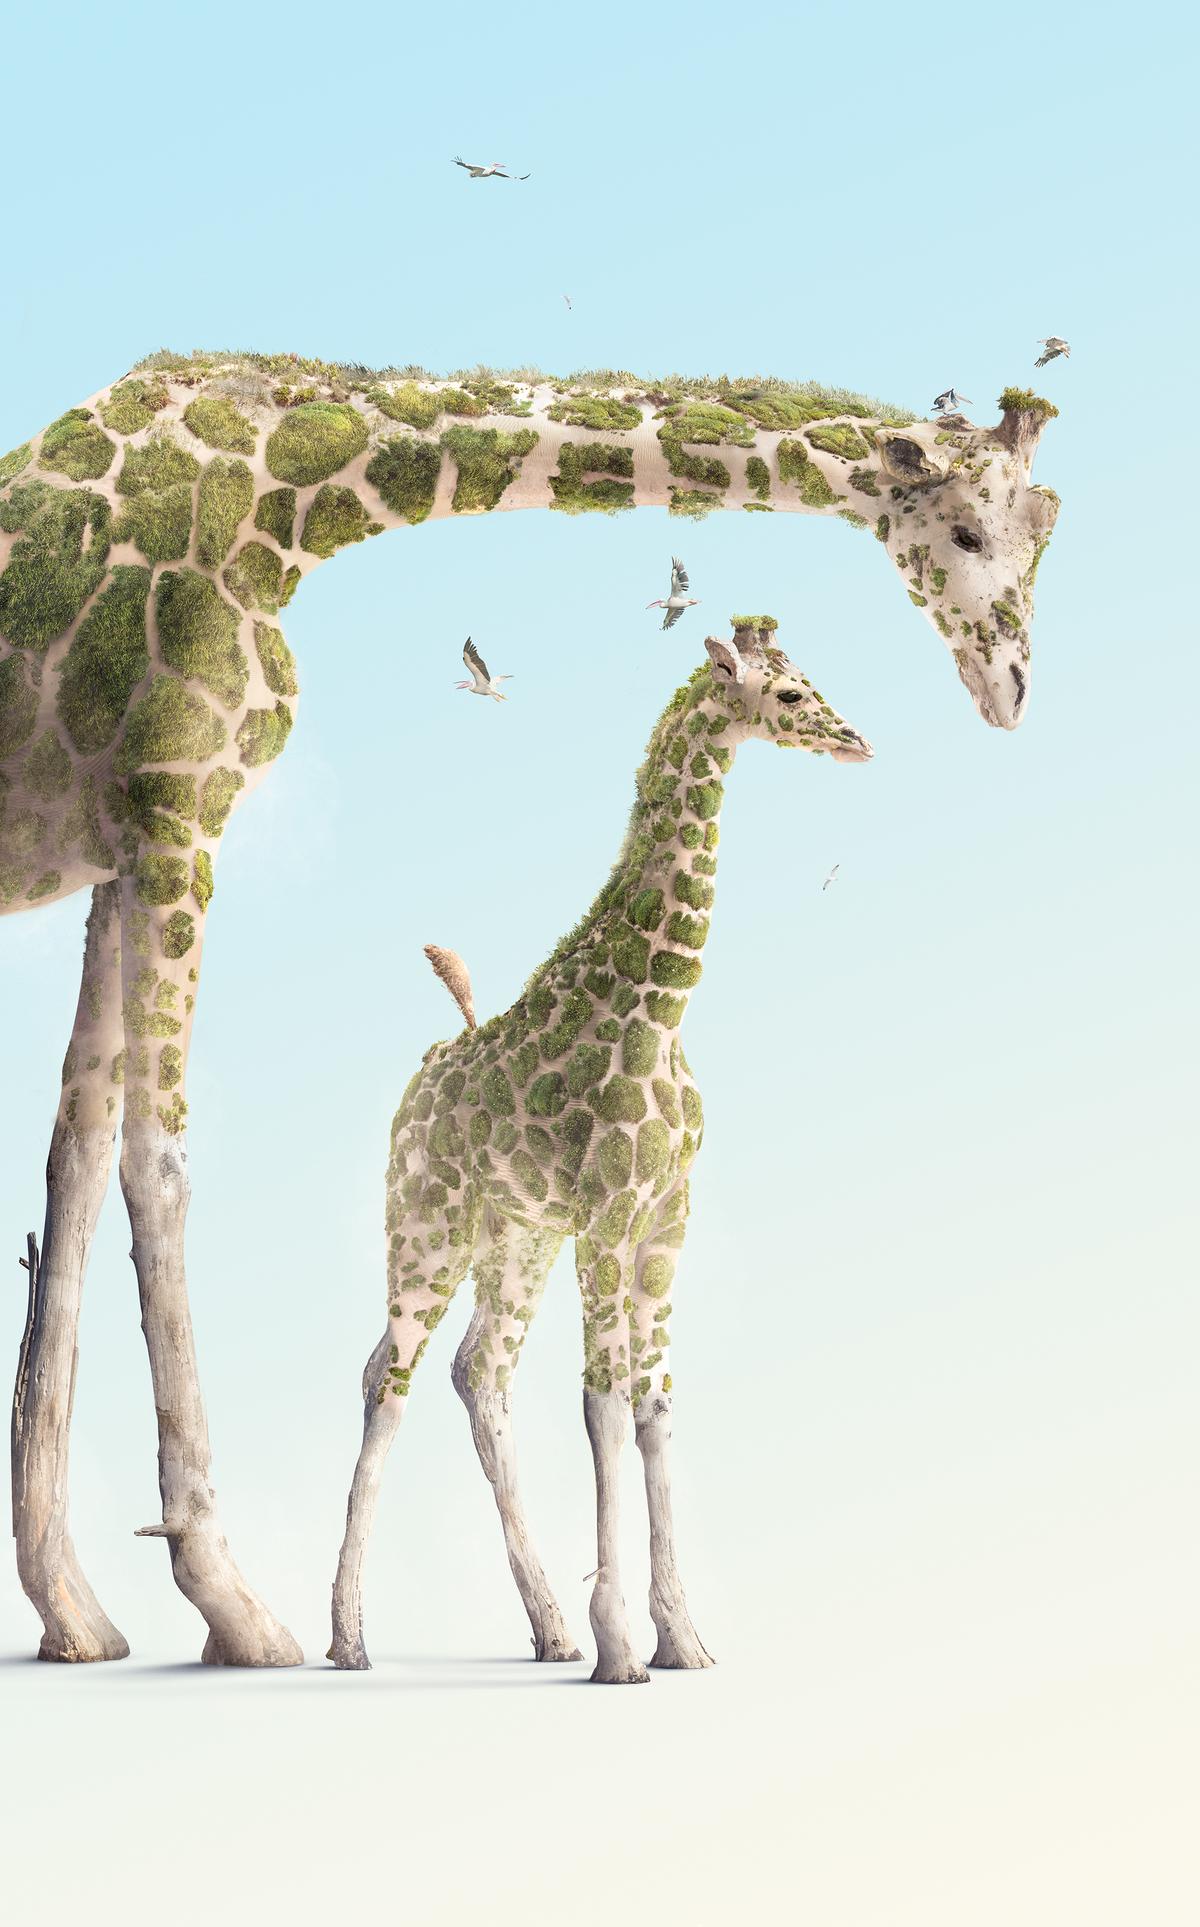 Beach photos are transformed by the artist into a mother giraffe and her calf. (Courtesy of <a href="https://www.instagram.com/joshdykgraaf/">Josh Dykgraaf</a>)